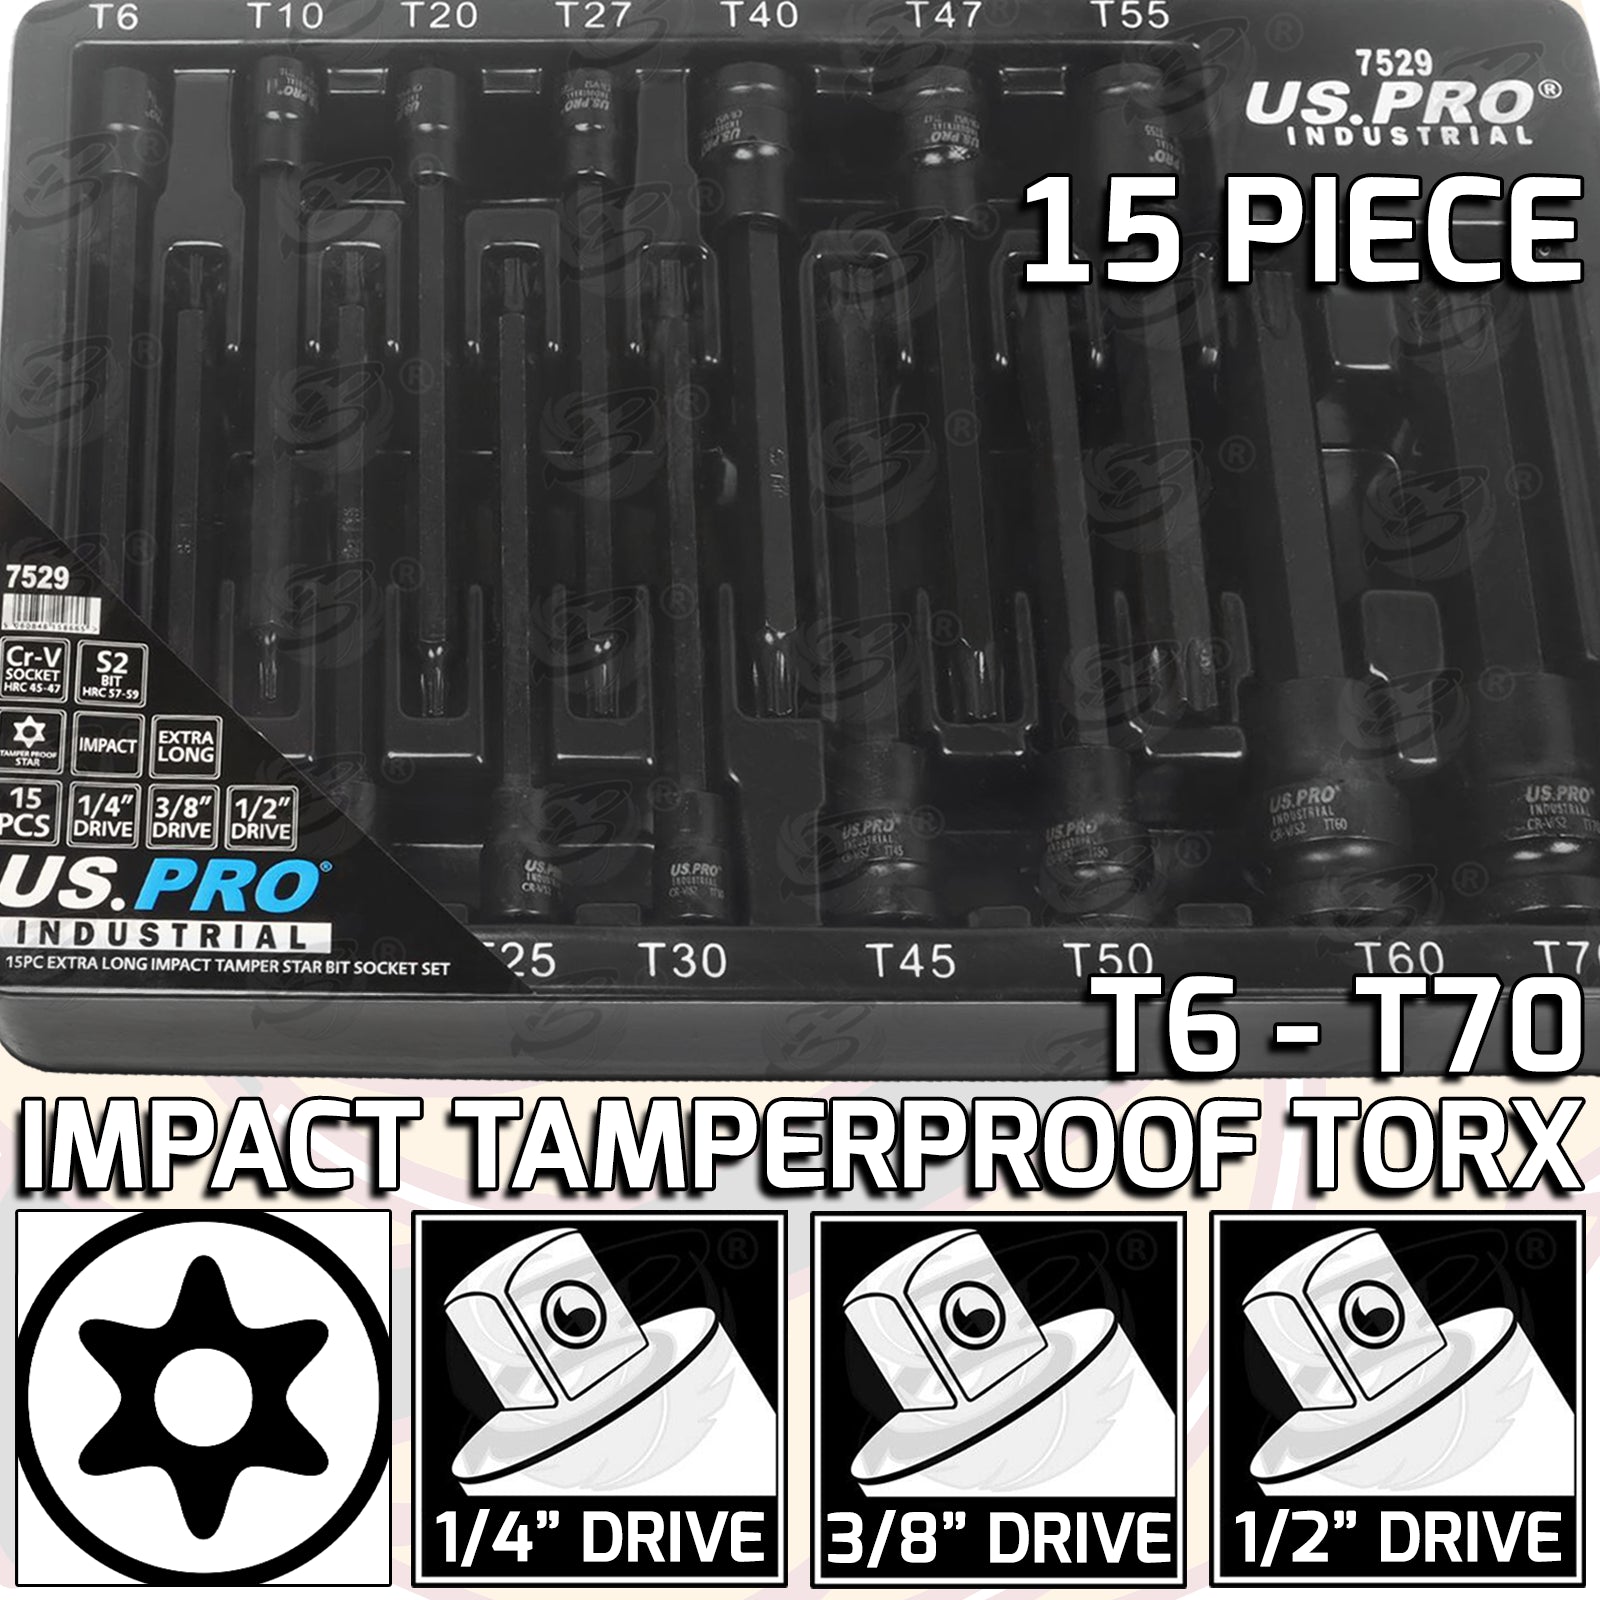 US PRO INDUSTRIAL 15PCS 1/4" & 3/8" & 1/2" DRIVE EXTRA LONG IMPACT TAMPERPROOF TORX BIT SOCKETS T6 - T70